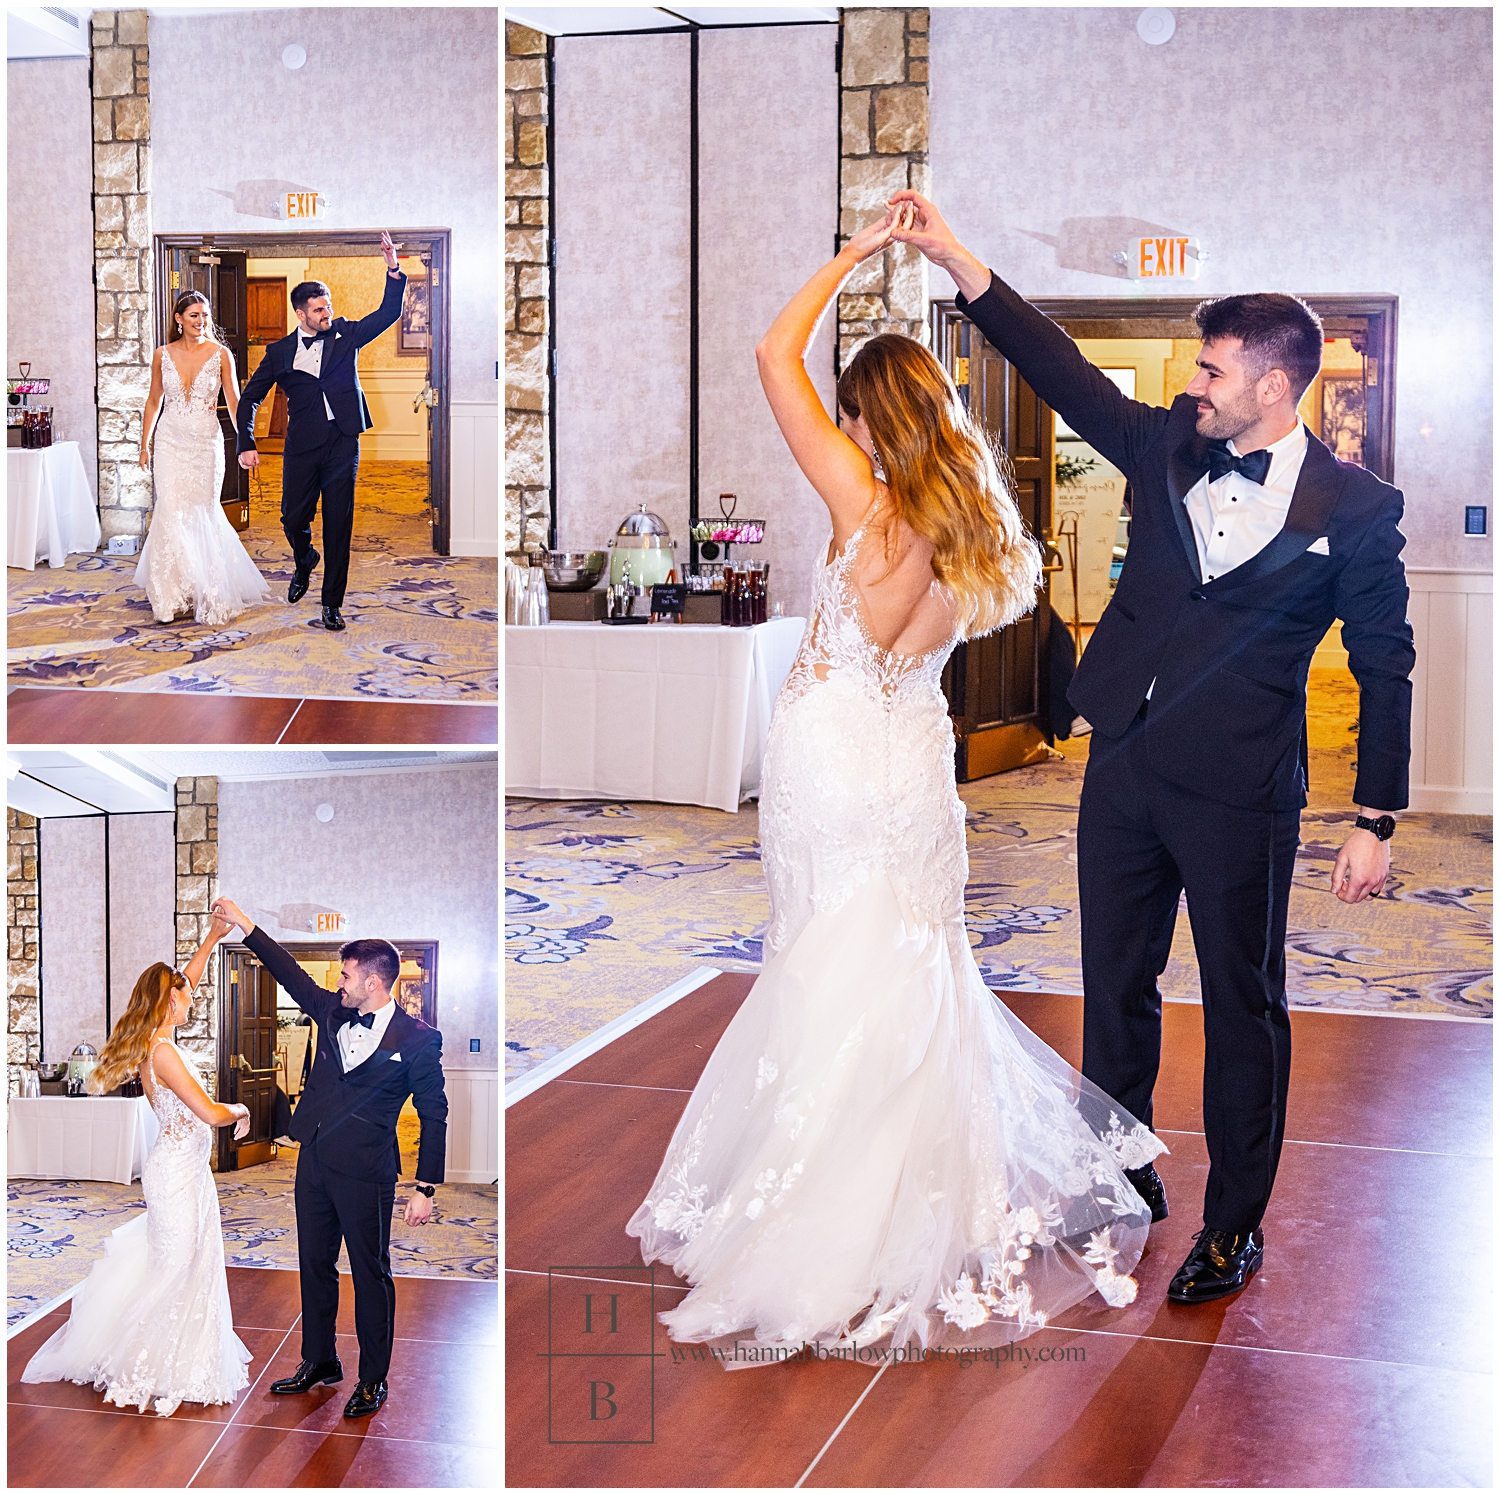 Bride and groom enter reception and groom spins bride.